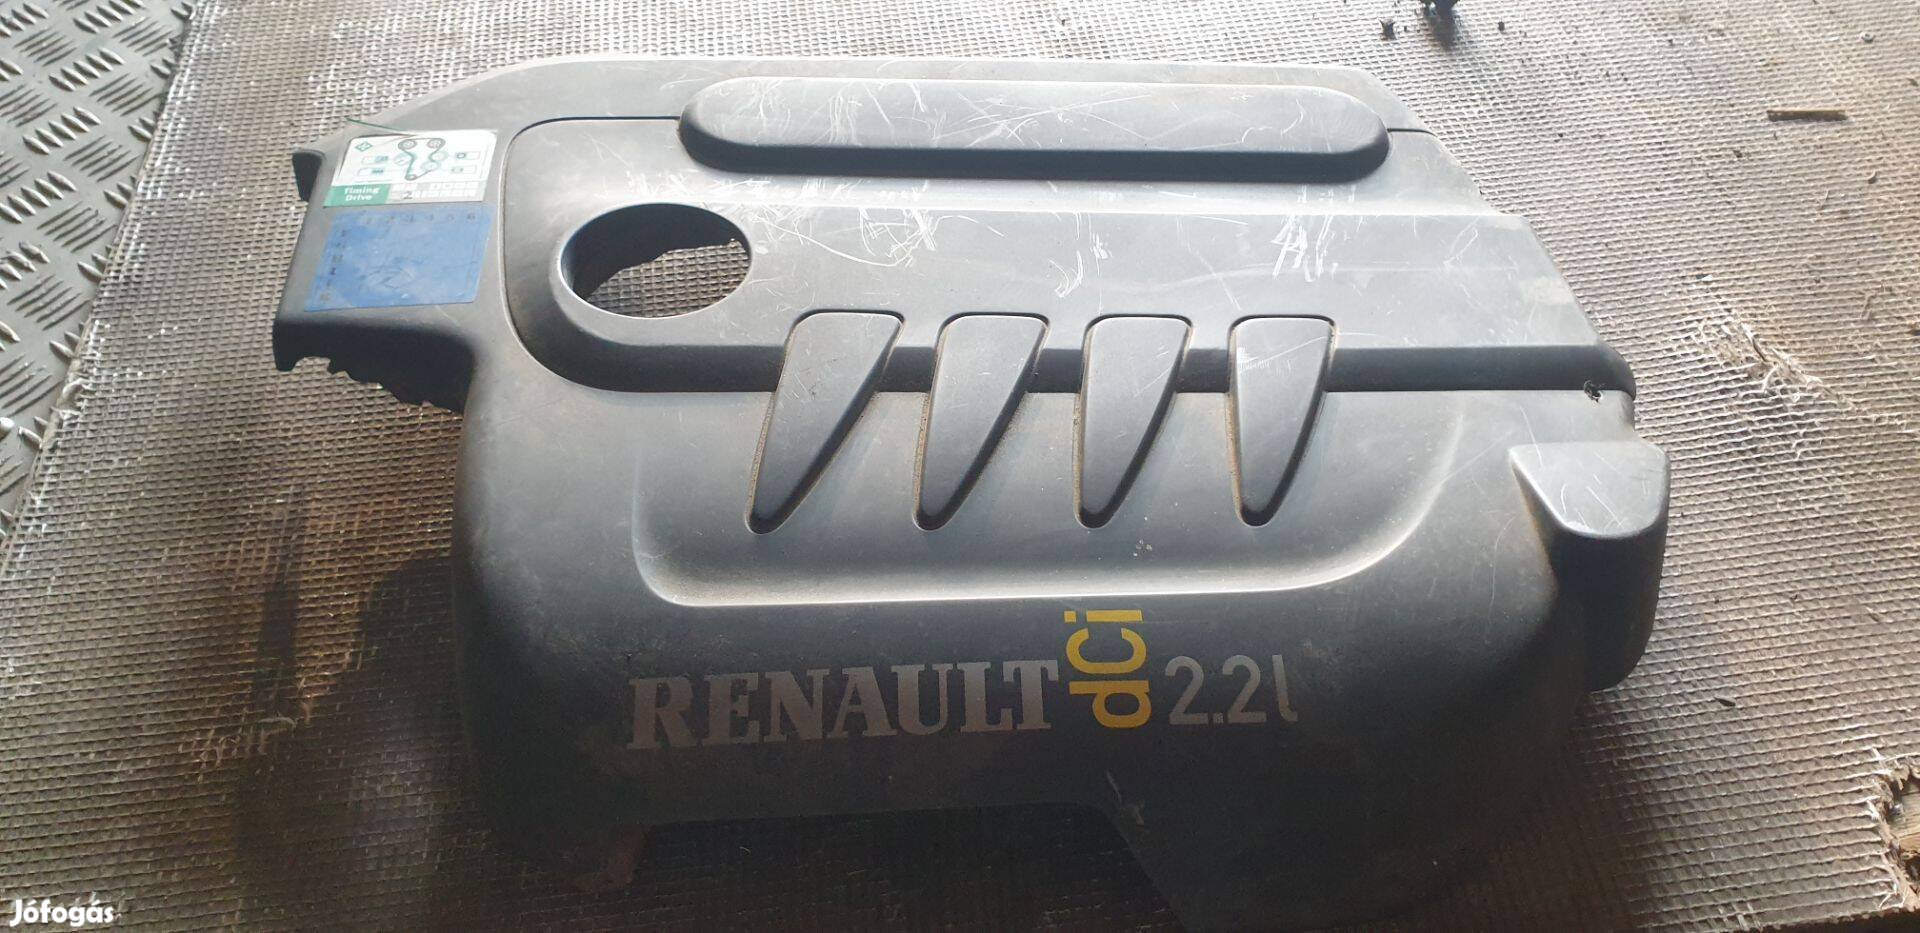 Renault Espace 2,2 Dci alkatrészek